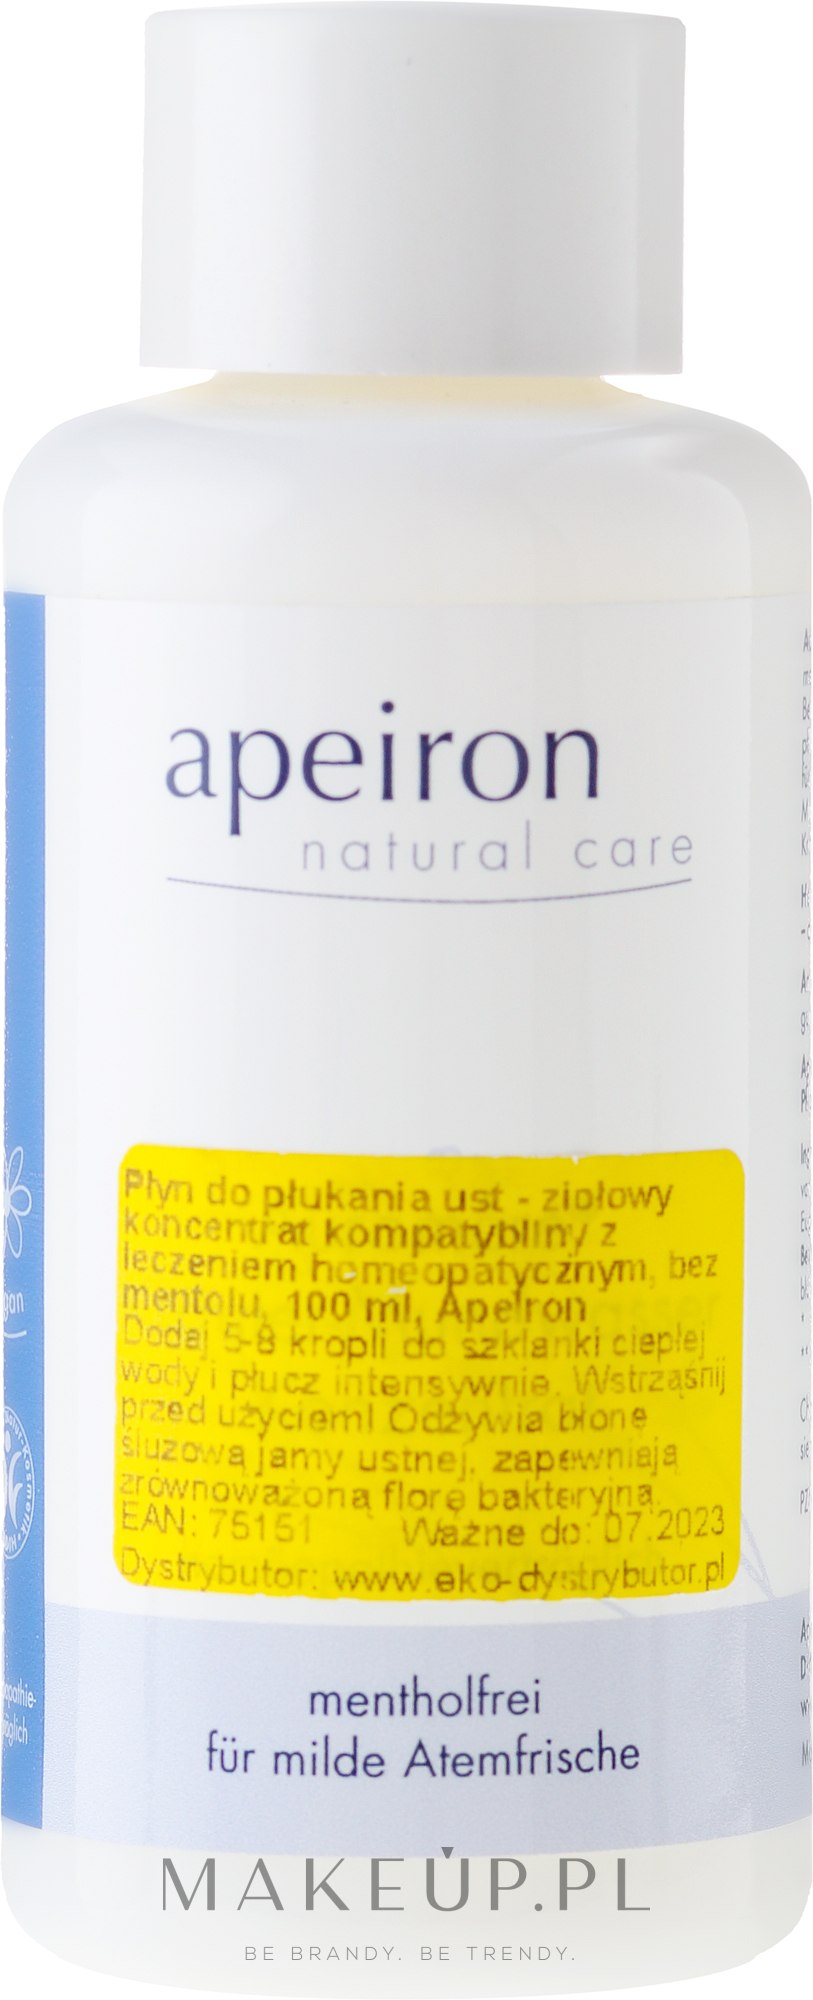 Homeopatyczny koncentrat do płukania jamy ustnej - Apeiron Auromere Herbal Concentrated Mouthwash Homeopathic  — Zdjęcie 100 ml